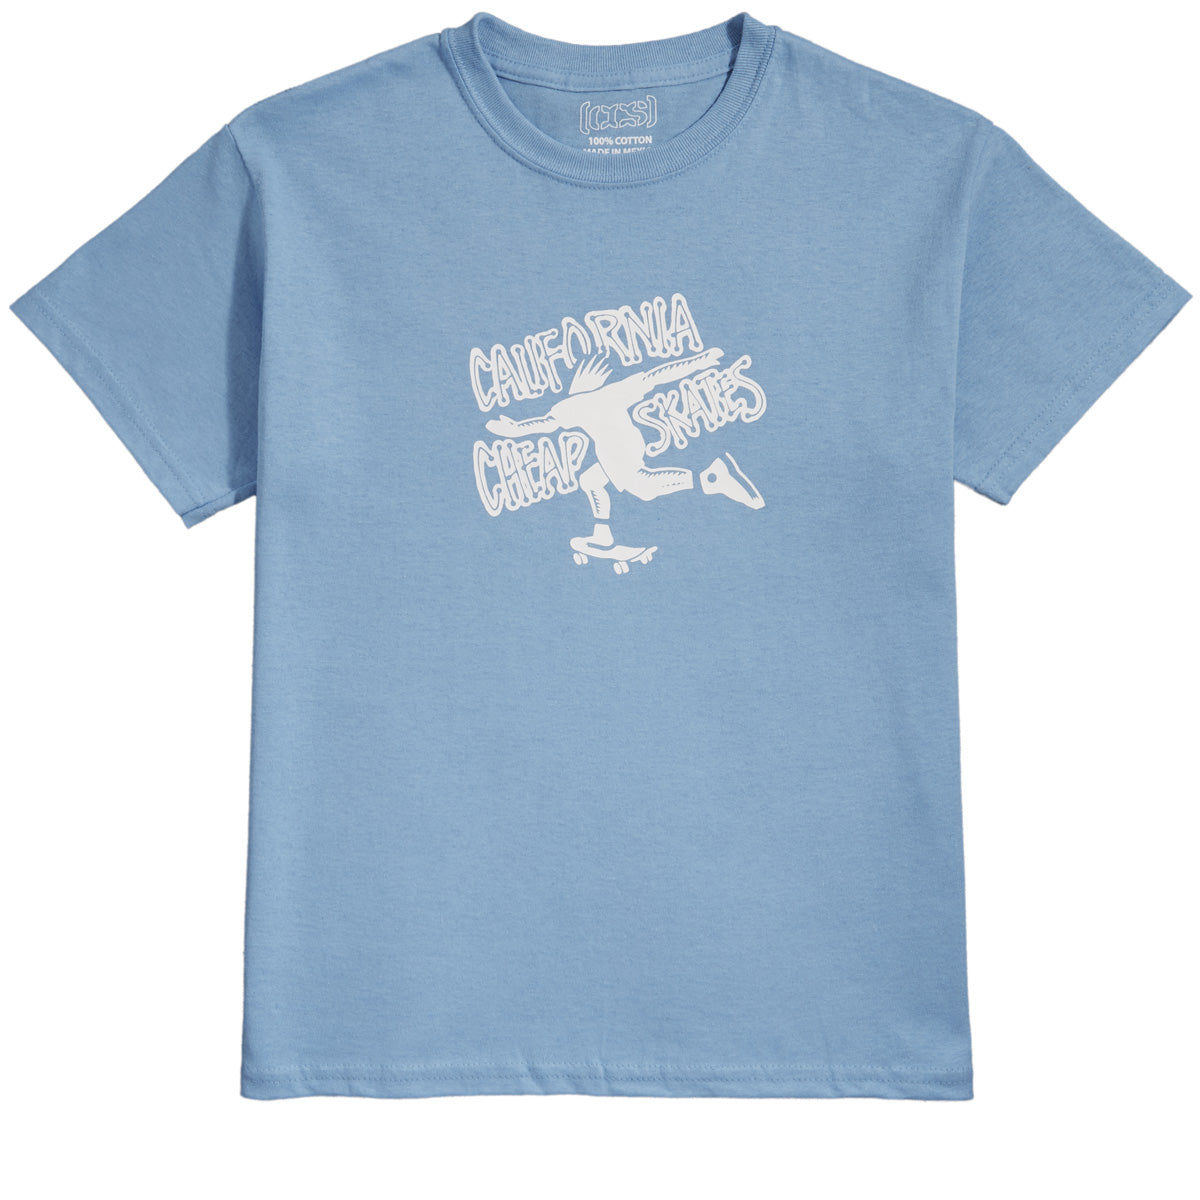 CCS Youth Cheap Skates T-Shirt - Light Blue/White image 1